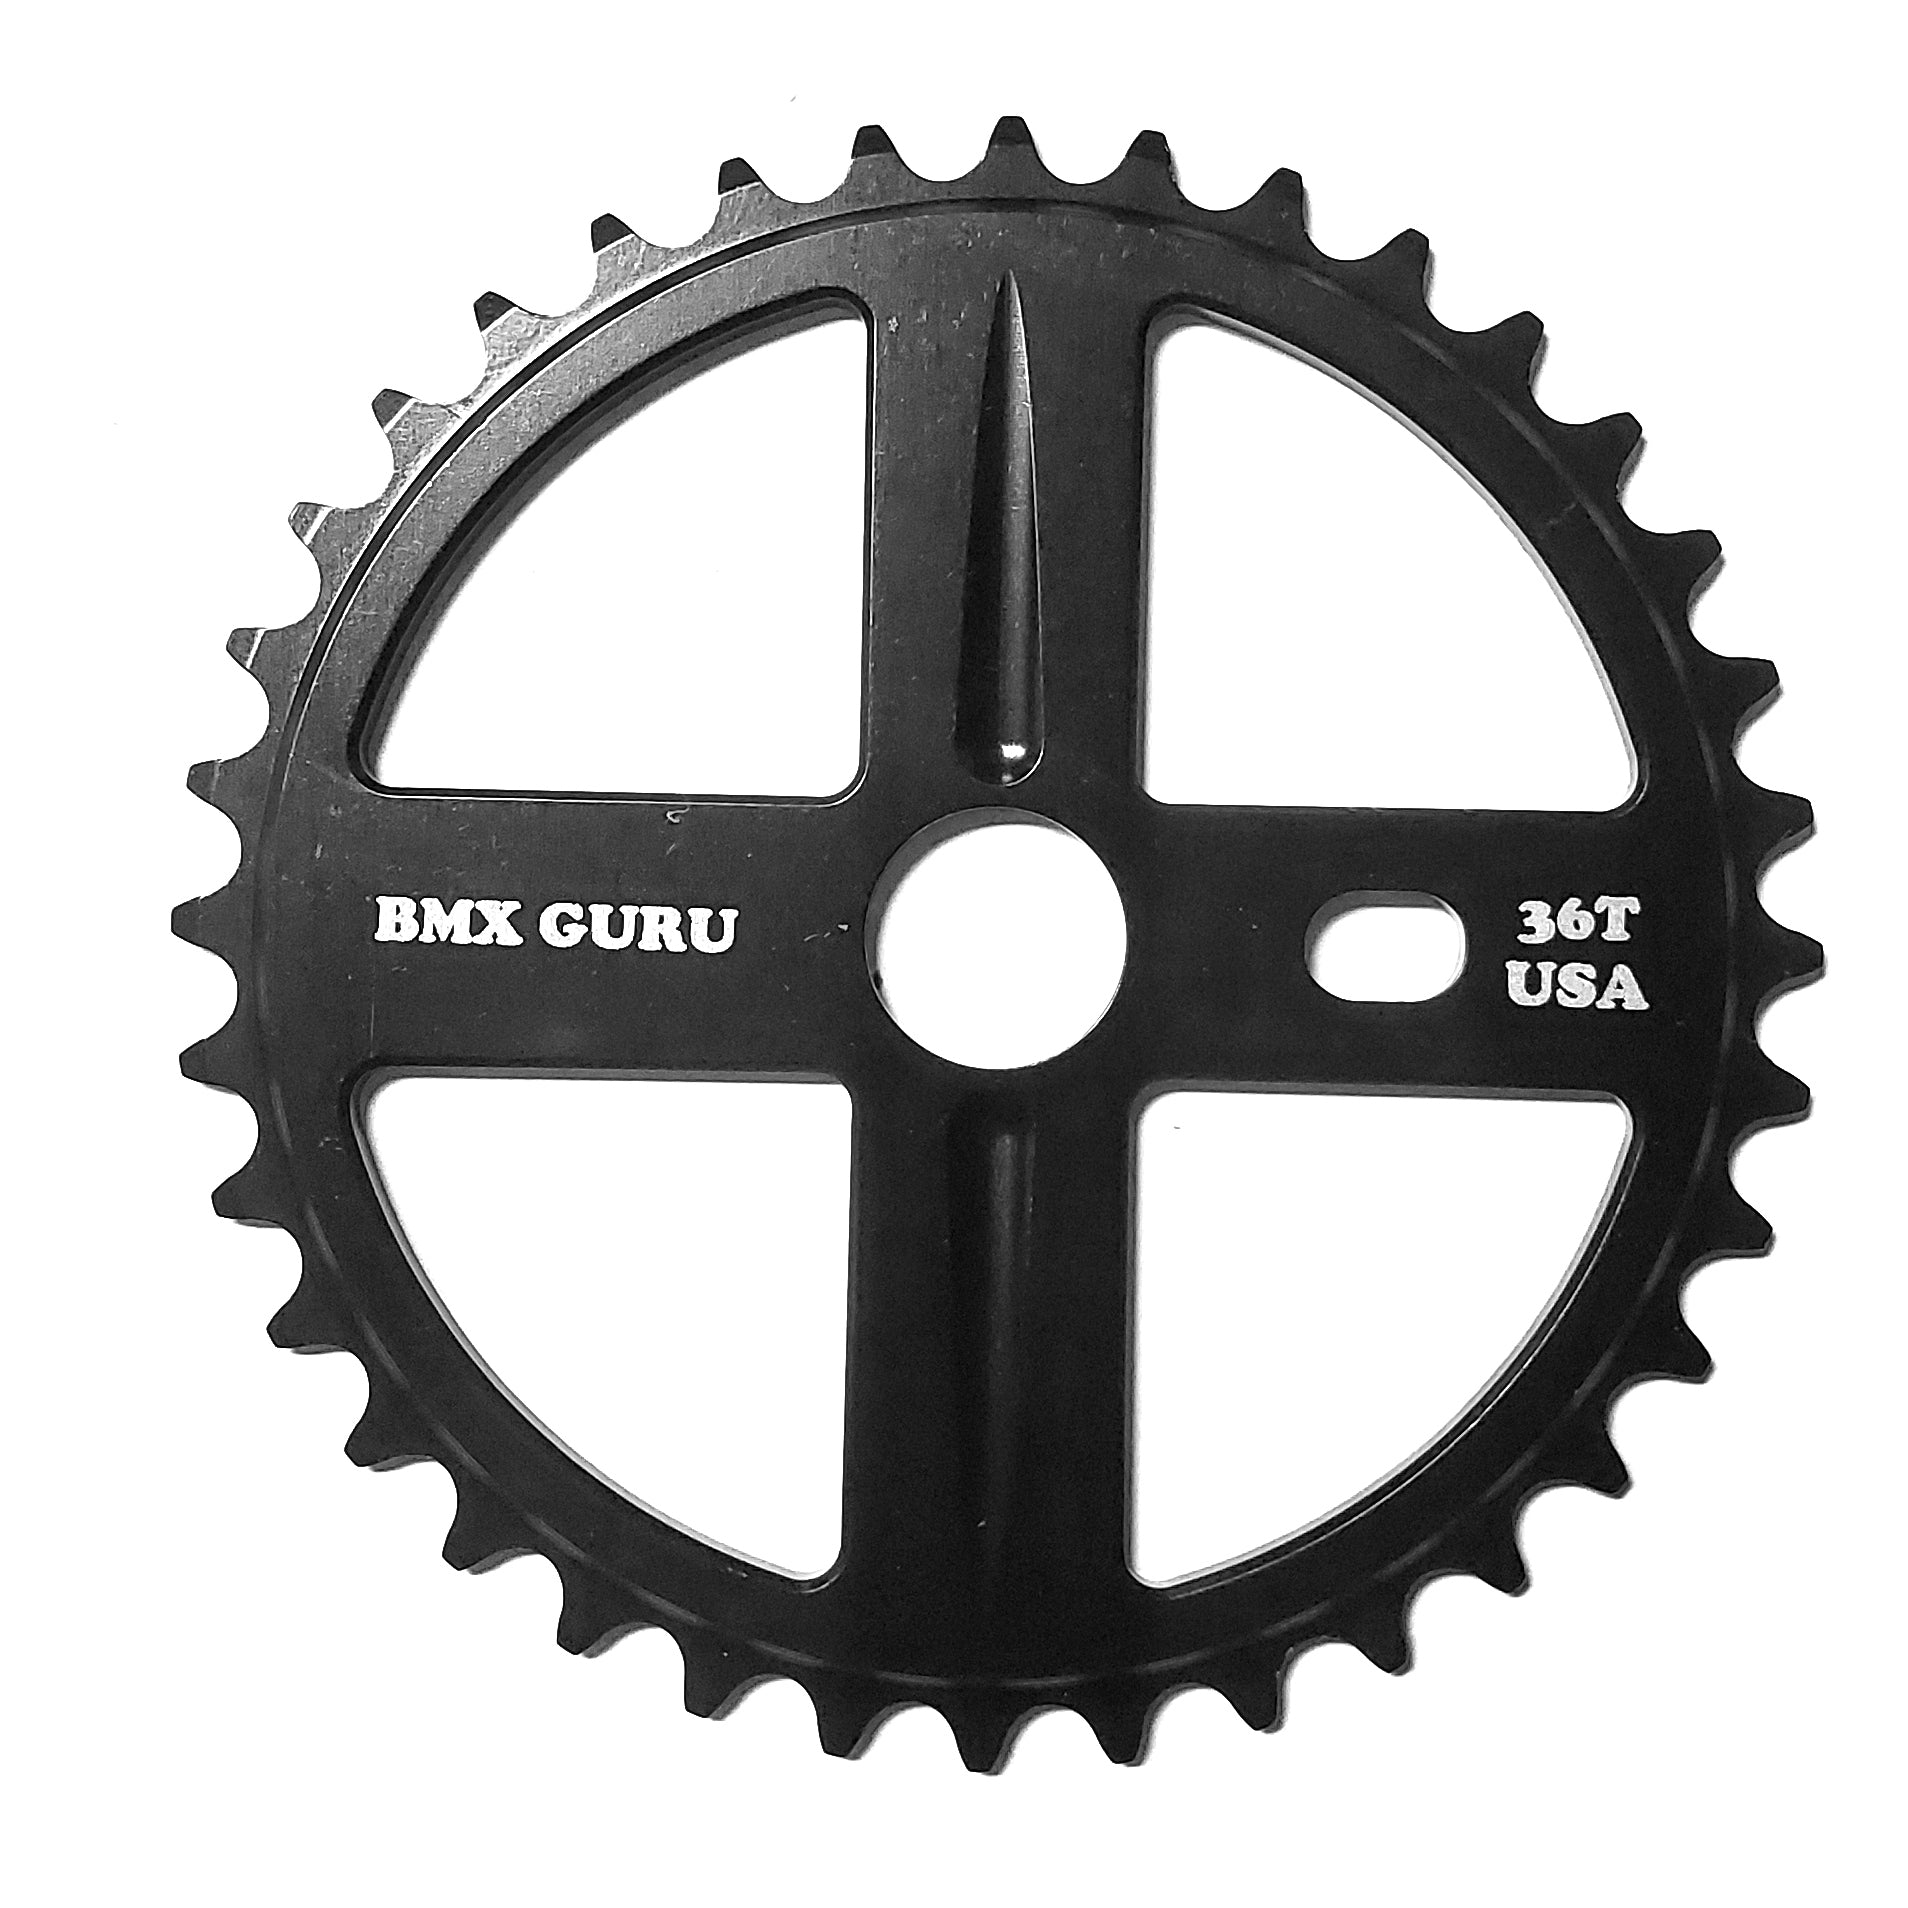 BMXGuru 36t Bolt Drive BMX Aluminum Sprocket / Chainwheel - Black - USA Made